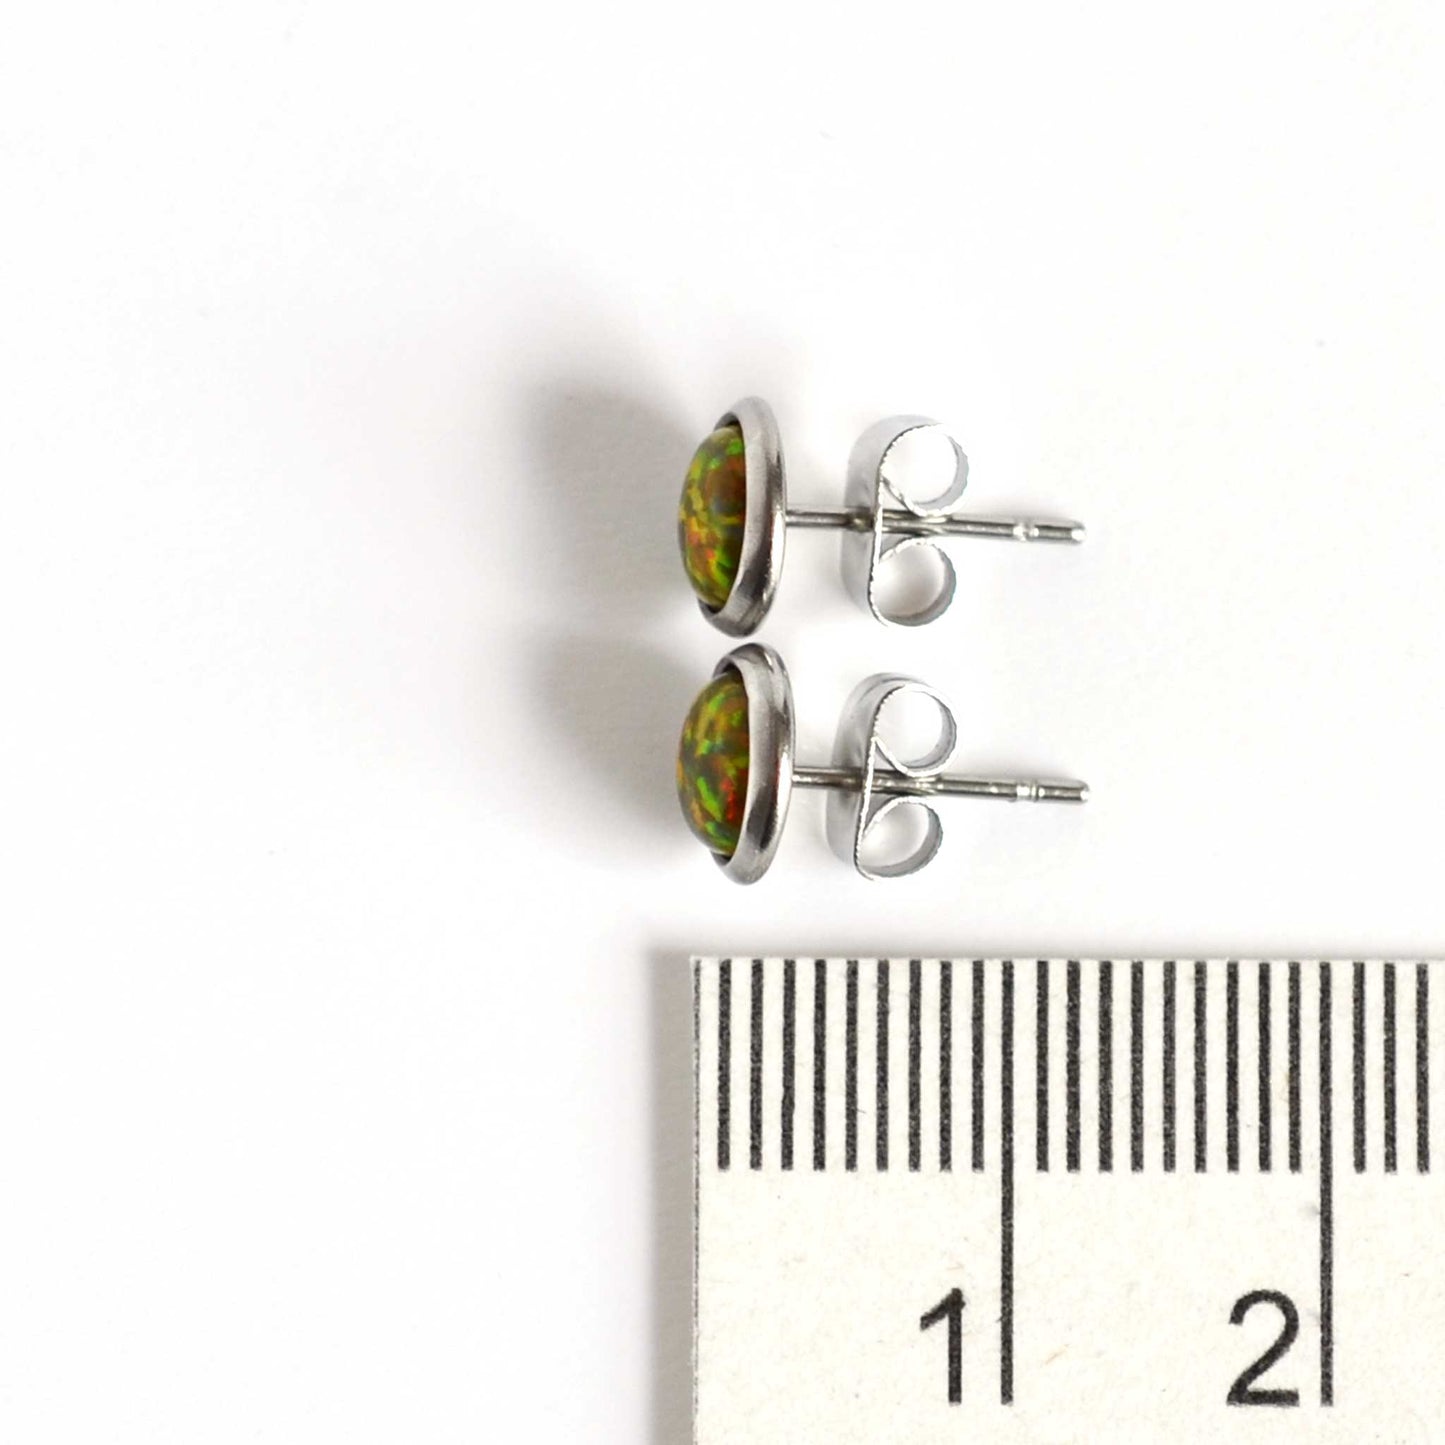 Dark green Opal stud earrings next to ruler